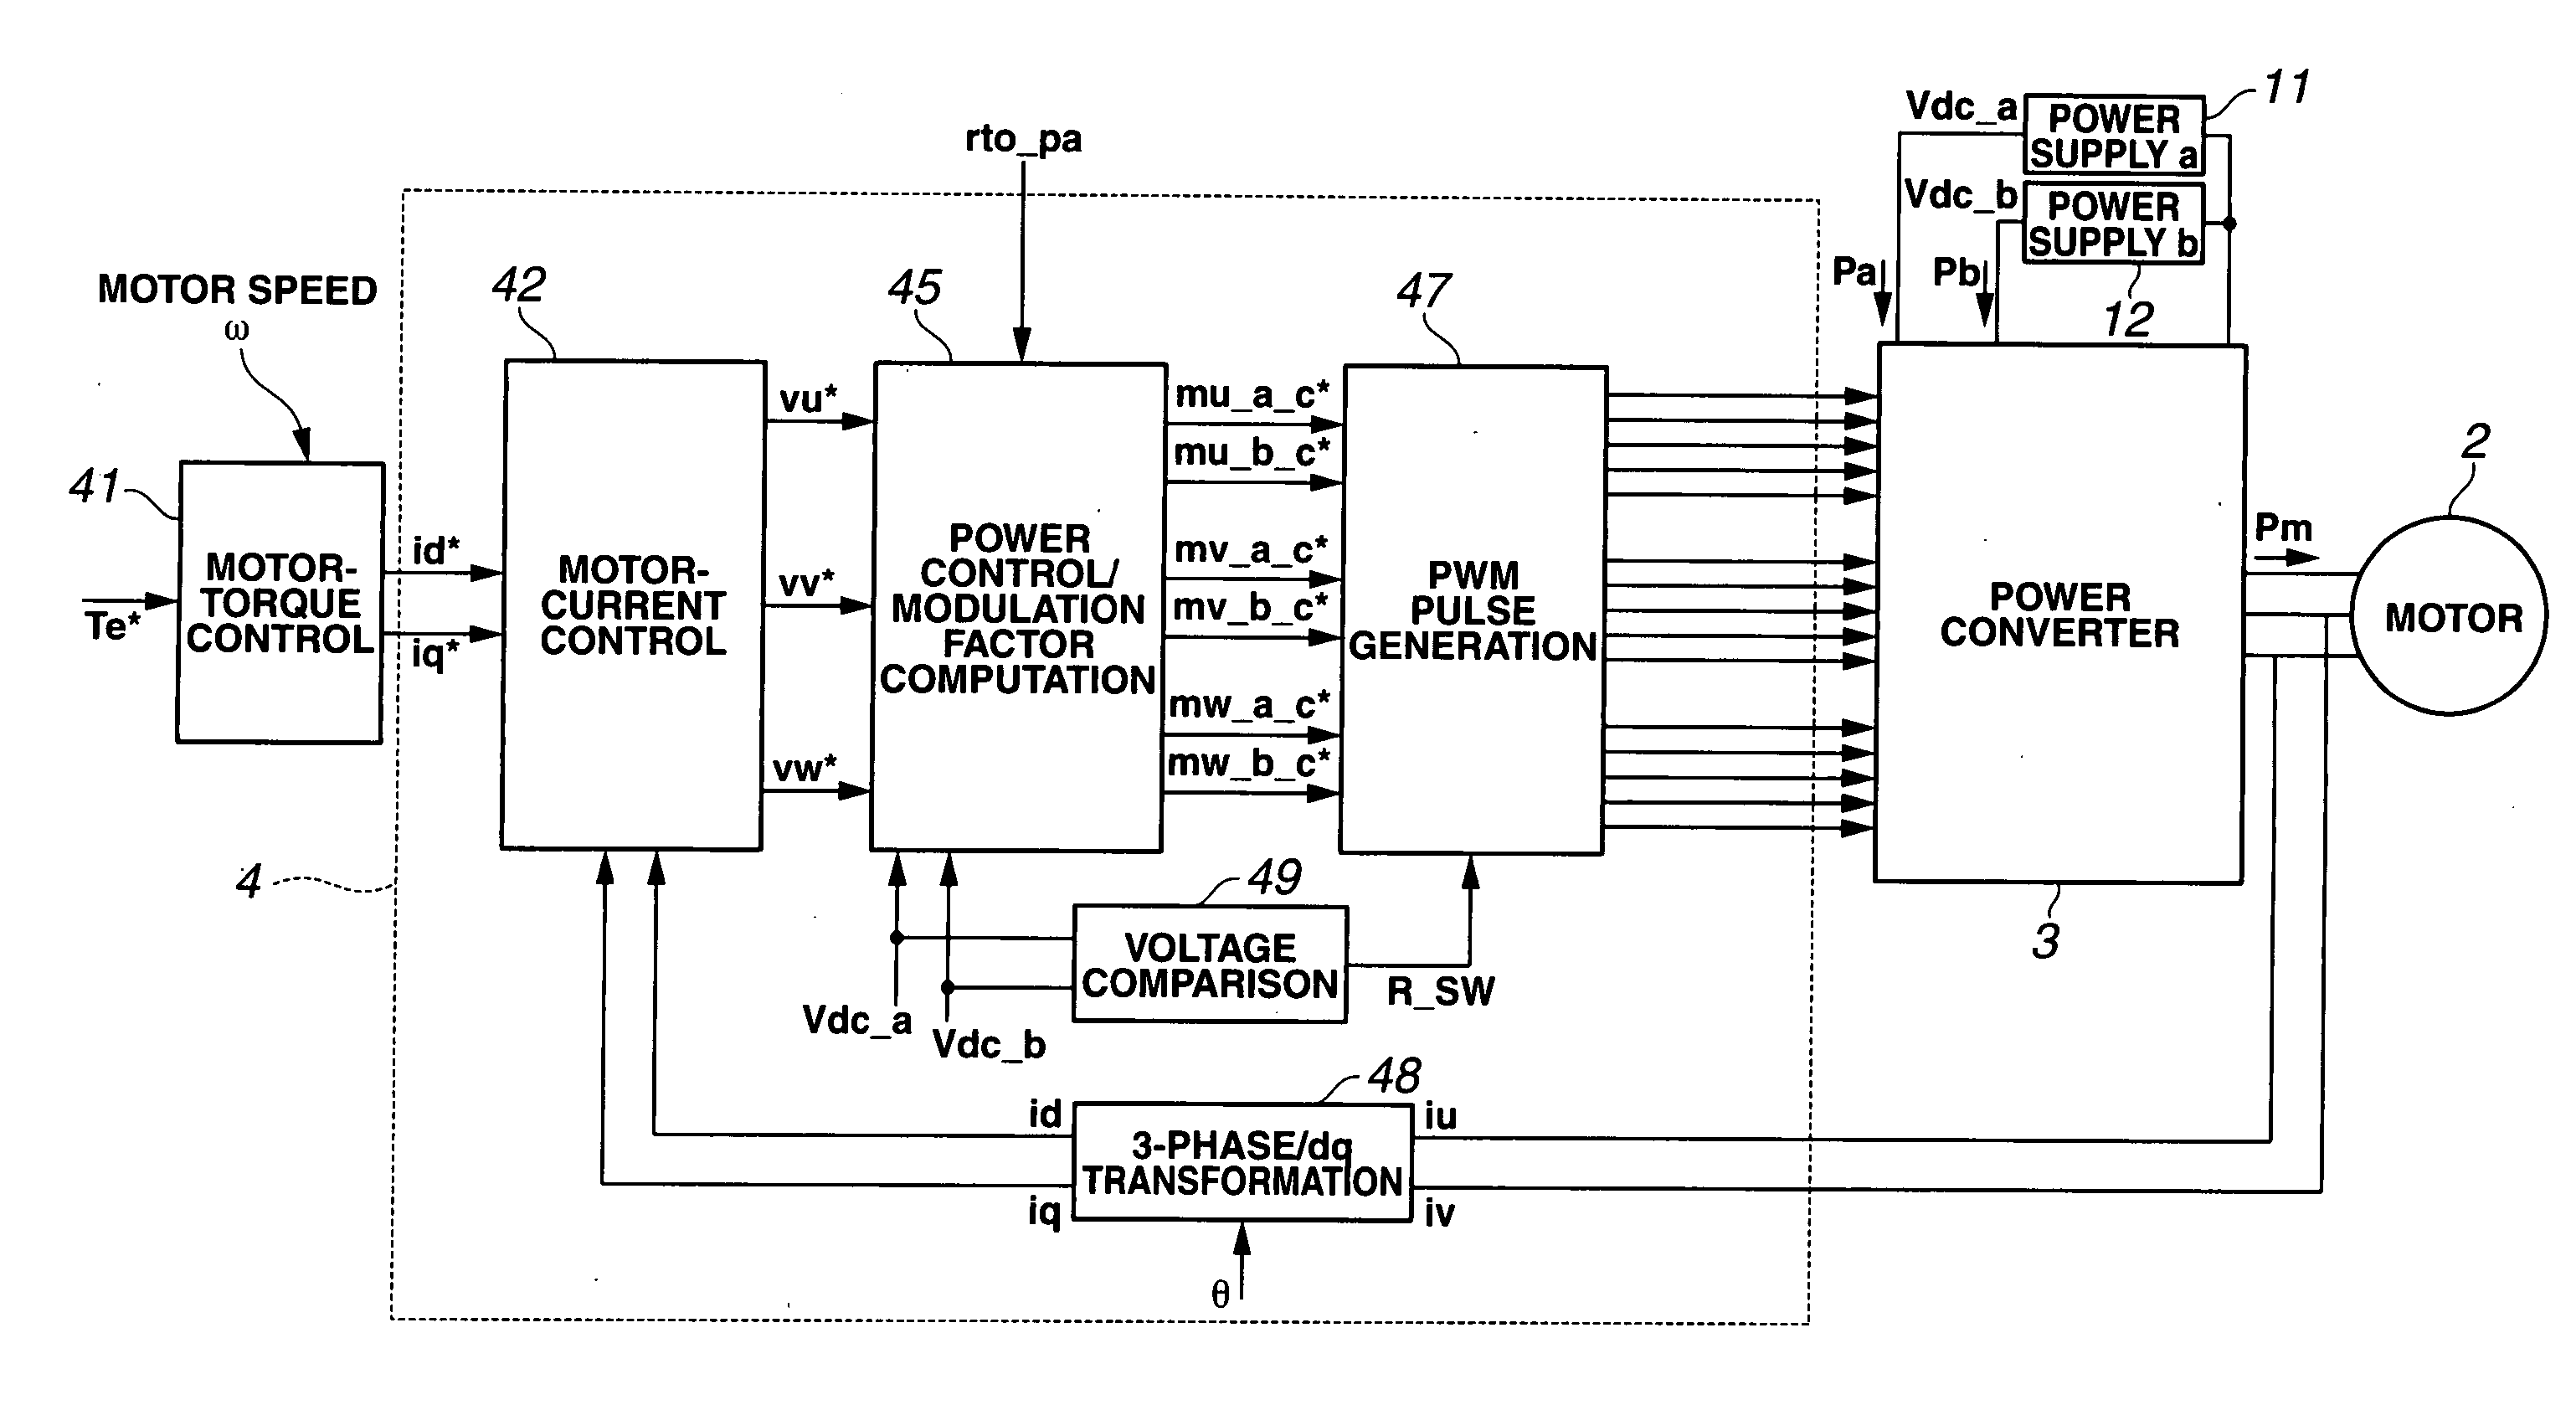 Electric power conversion apparatus